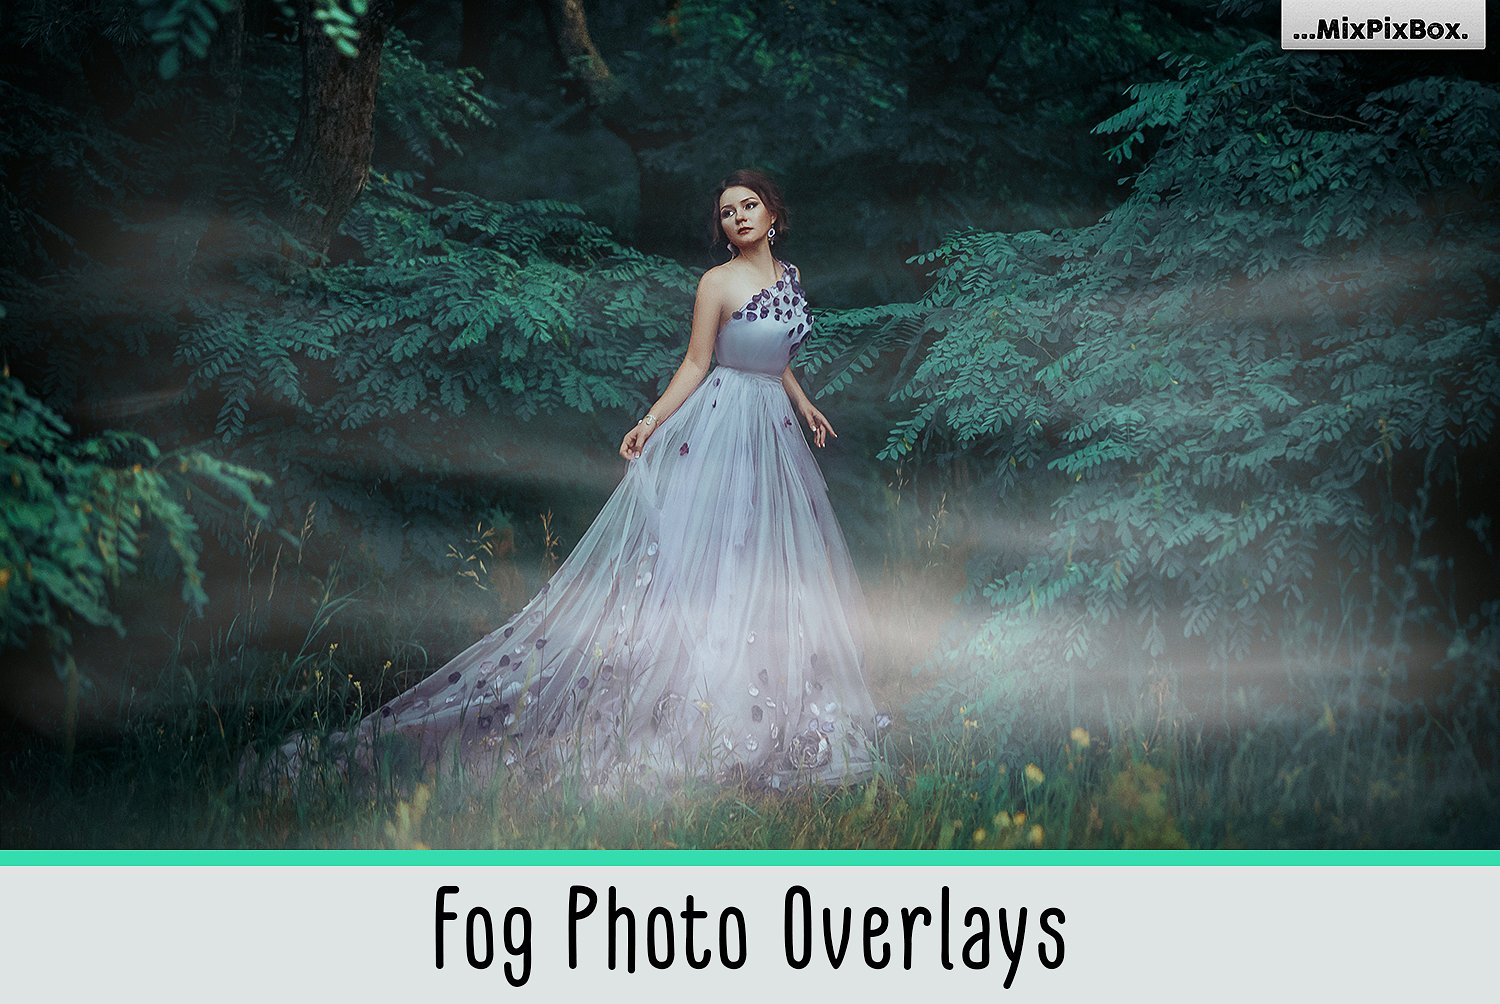 1000+ Photo Overlays for Amazing Photo Effects